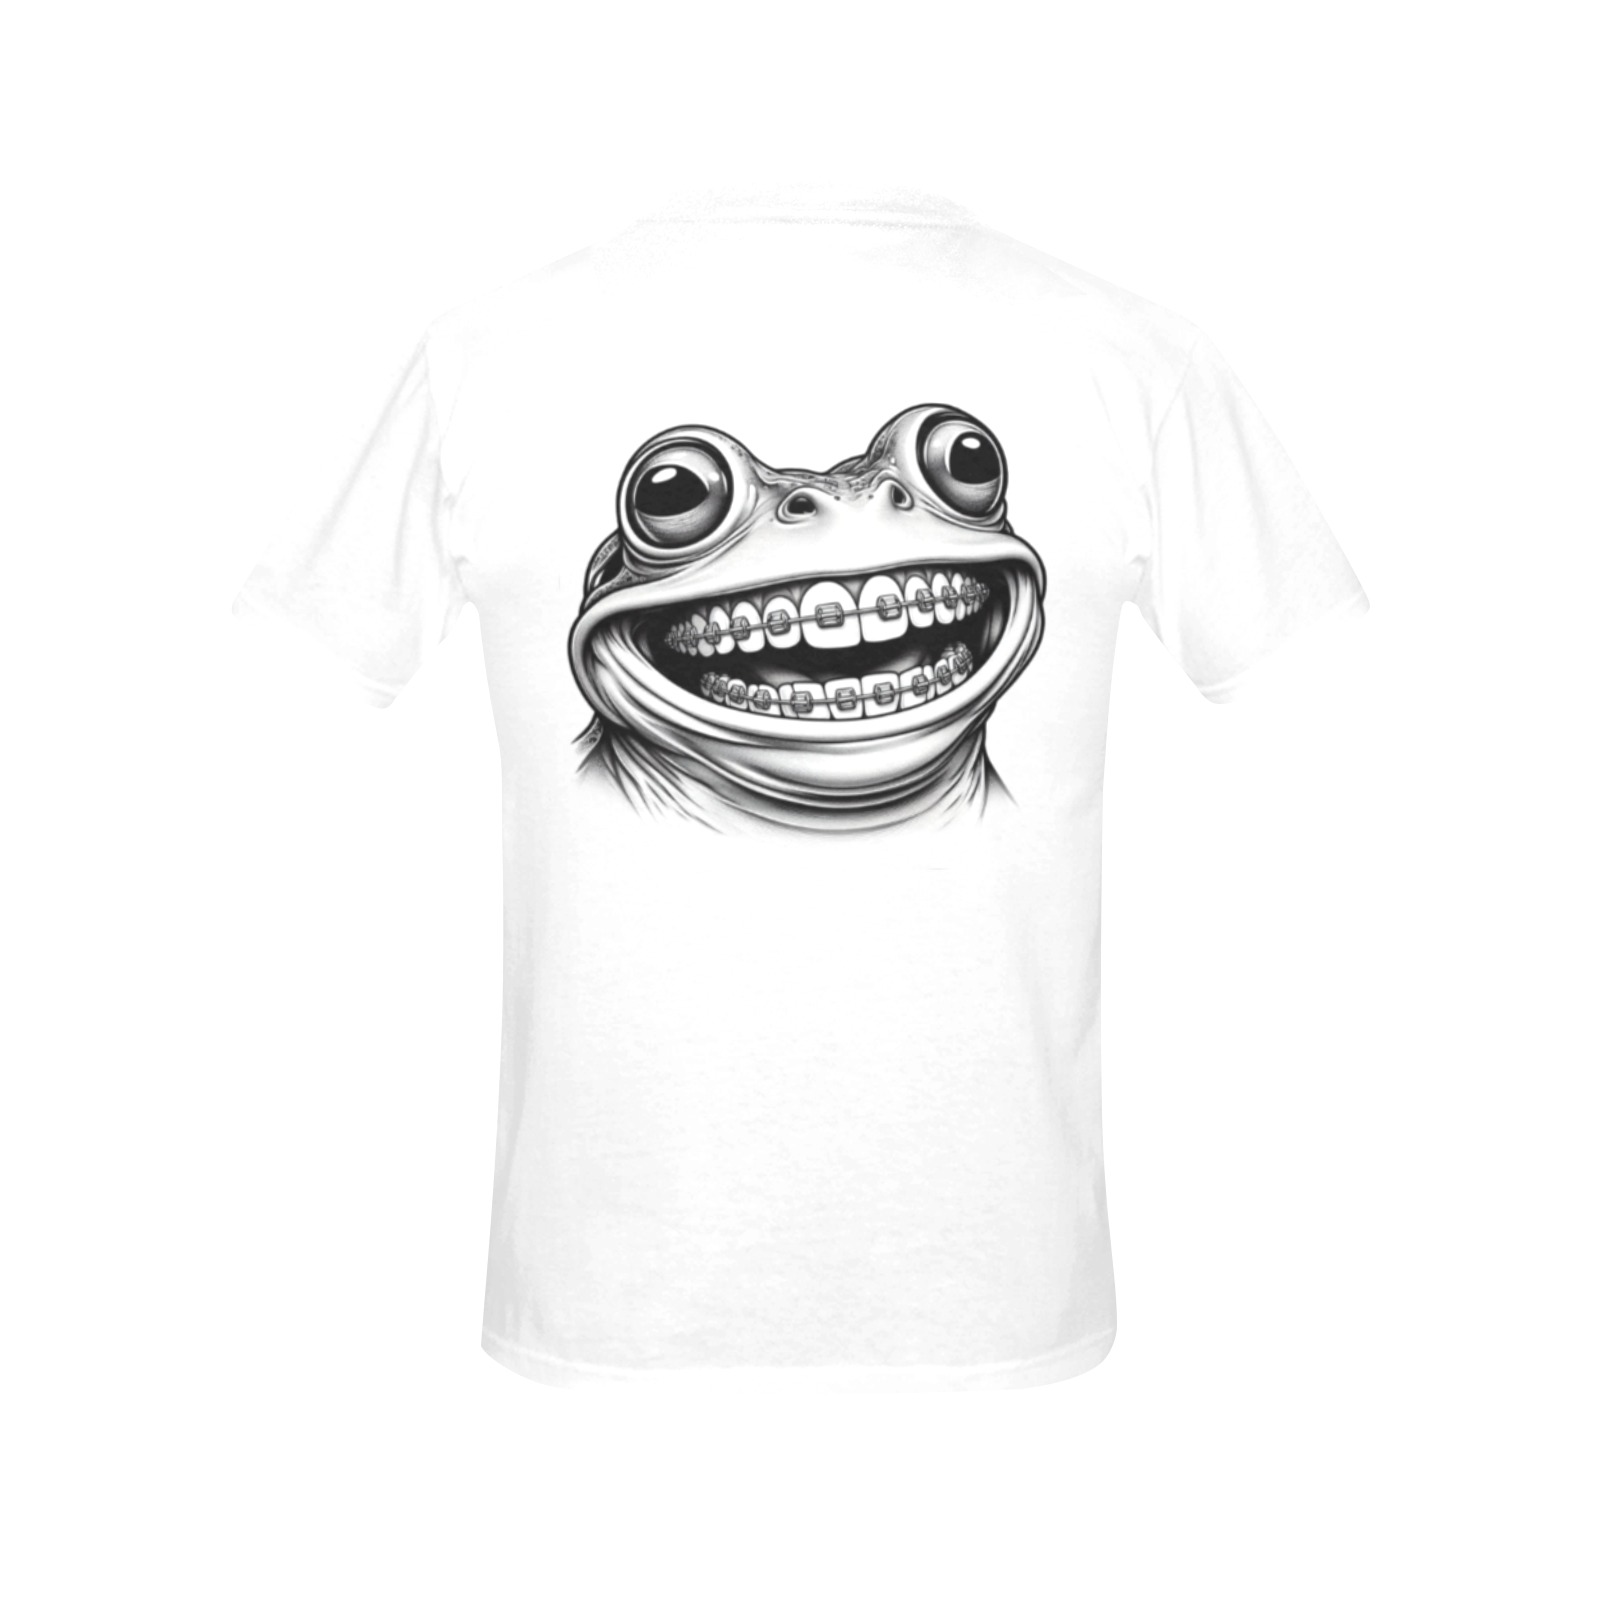 frog Women's All Over Print Crew Neck T-Shirt (Model T40-2)